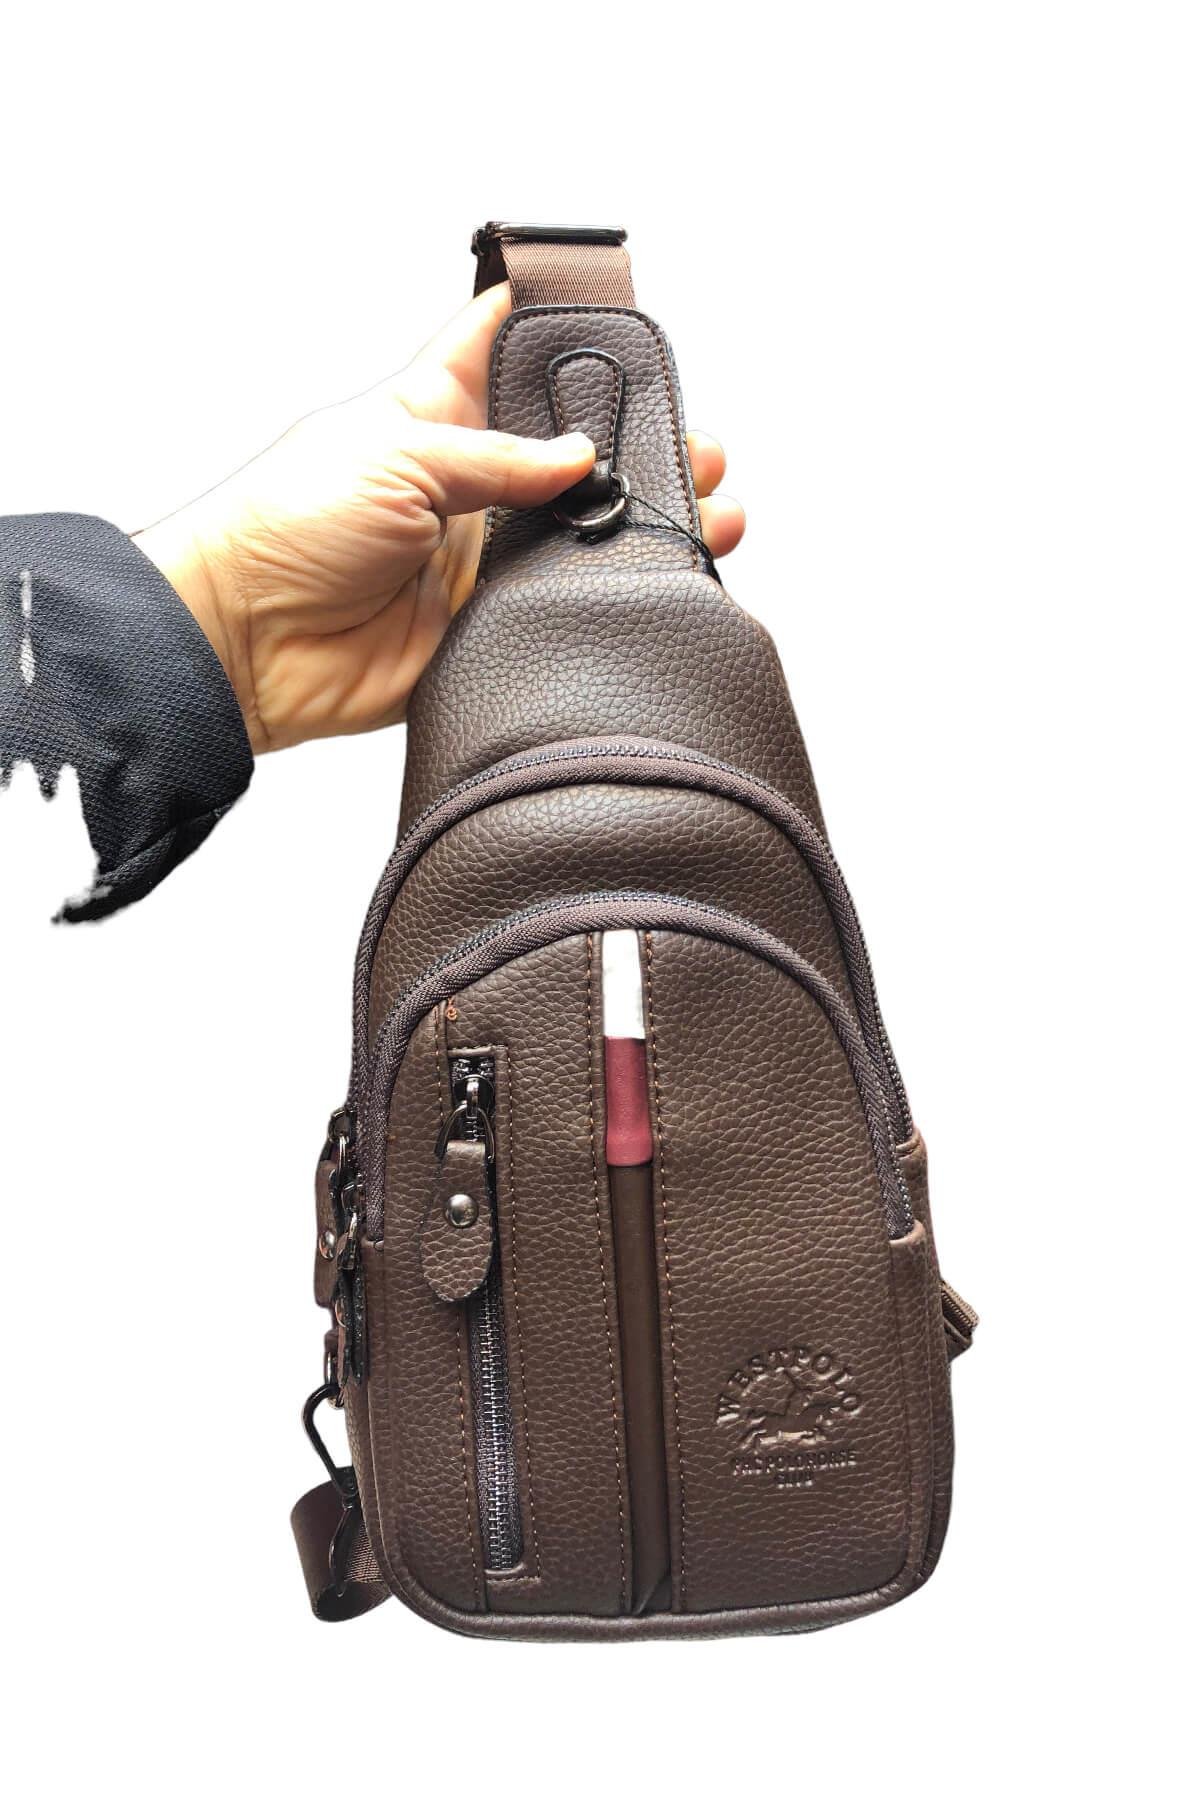 Erkek Bady bags çanta 28cm15 westpolo erkek çanta |elizabell.com.tr